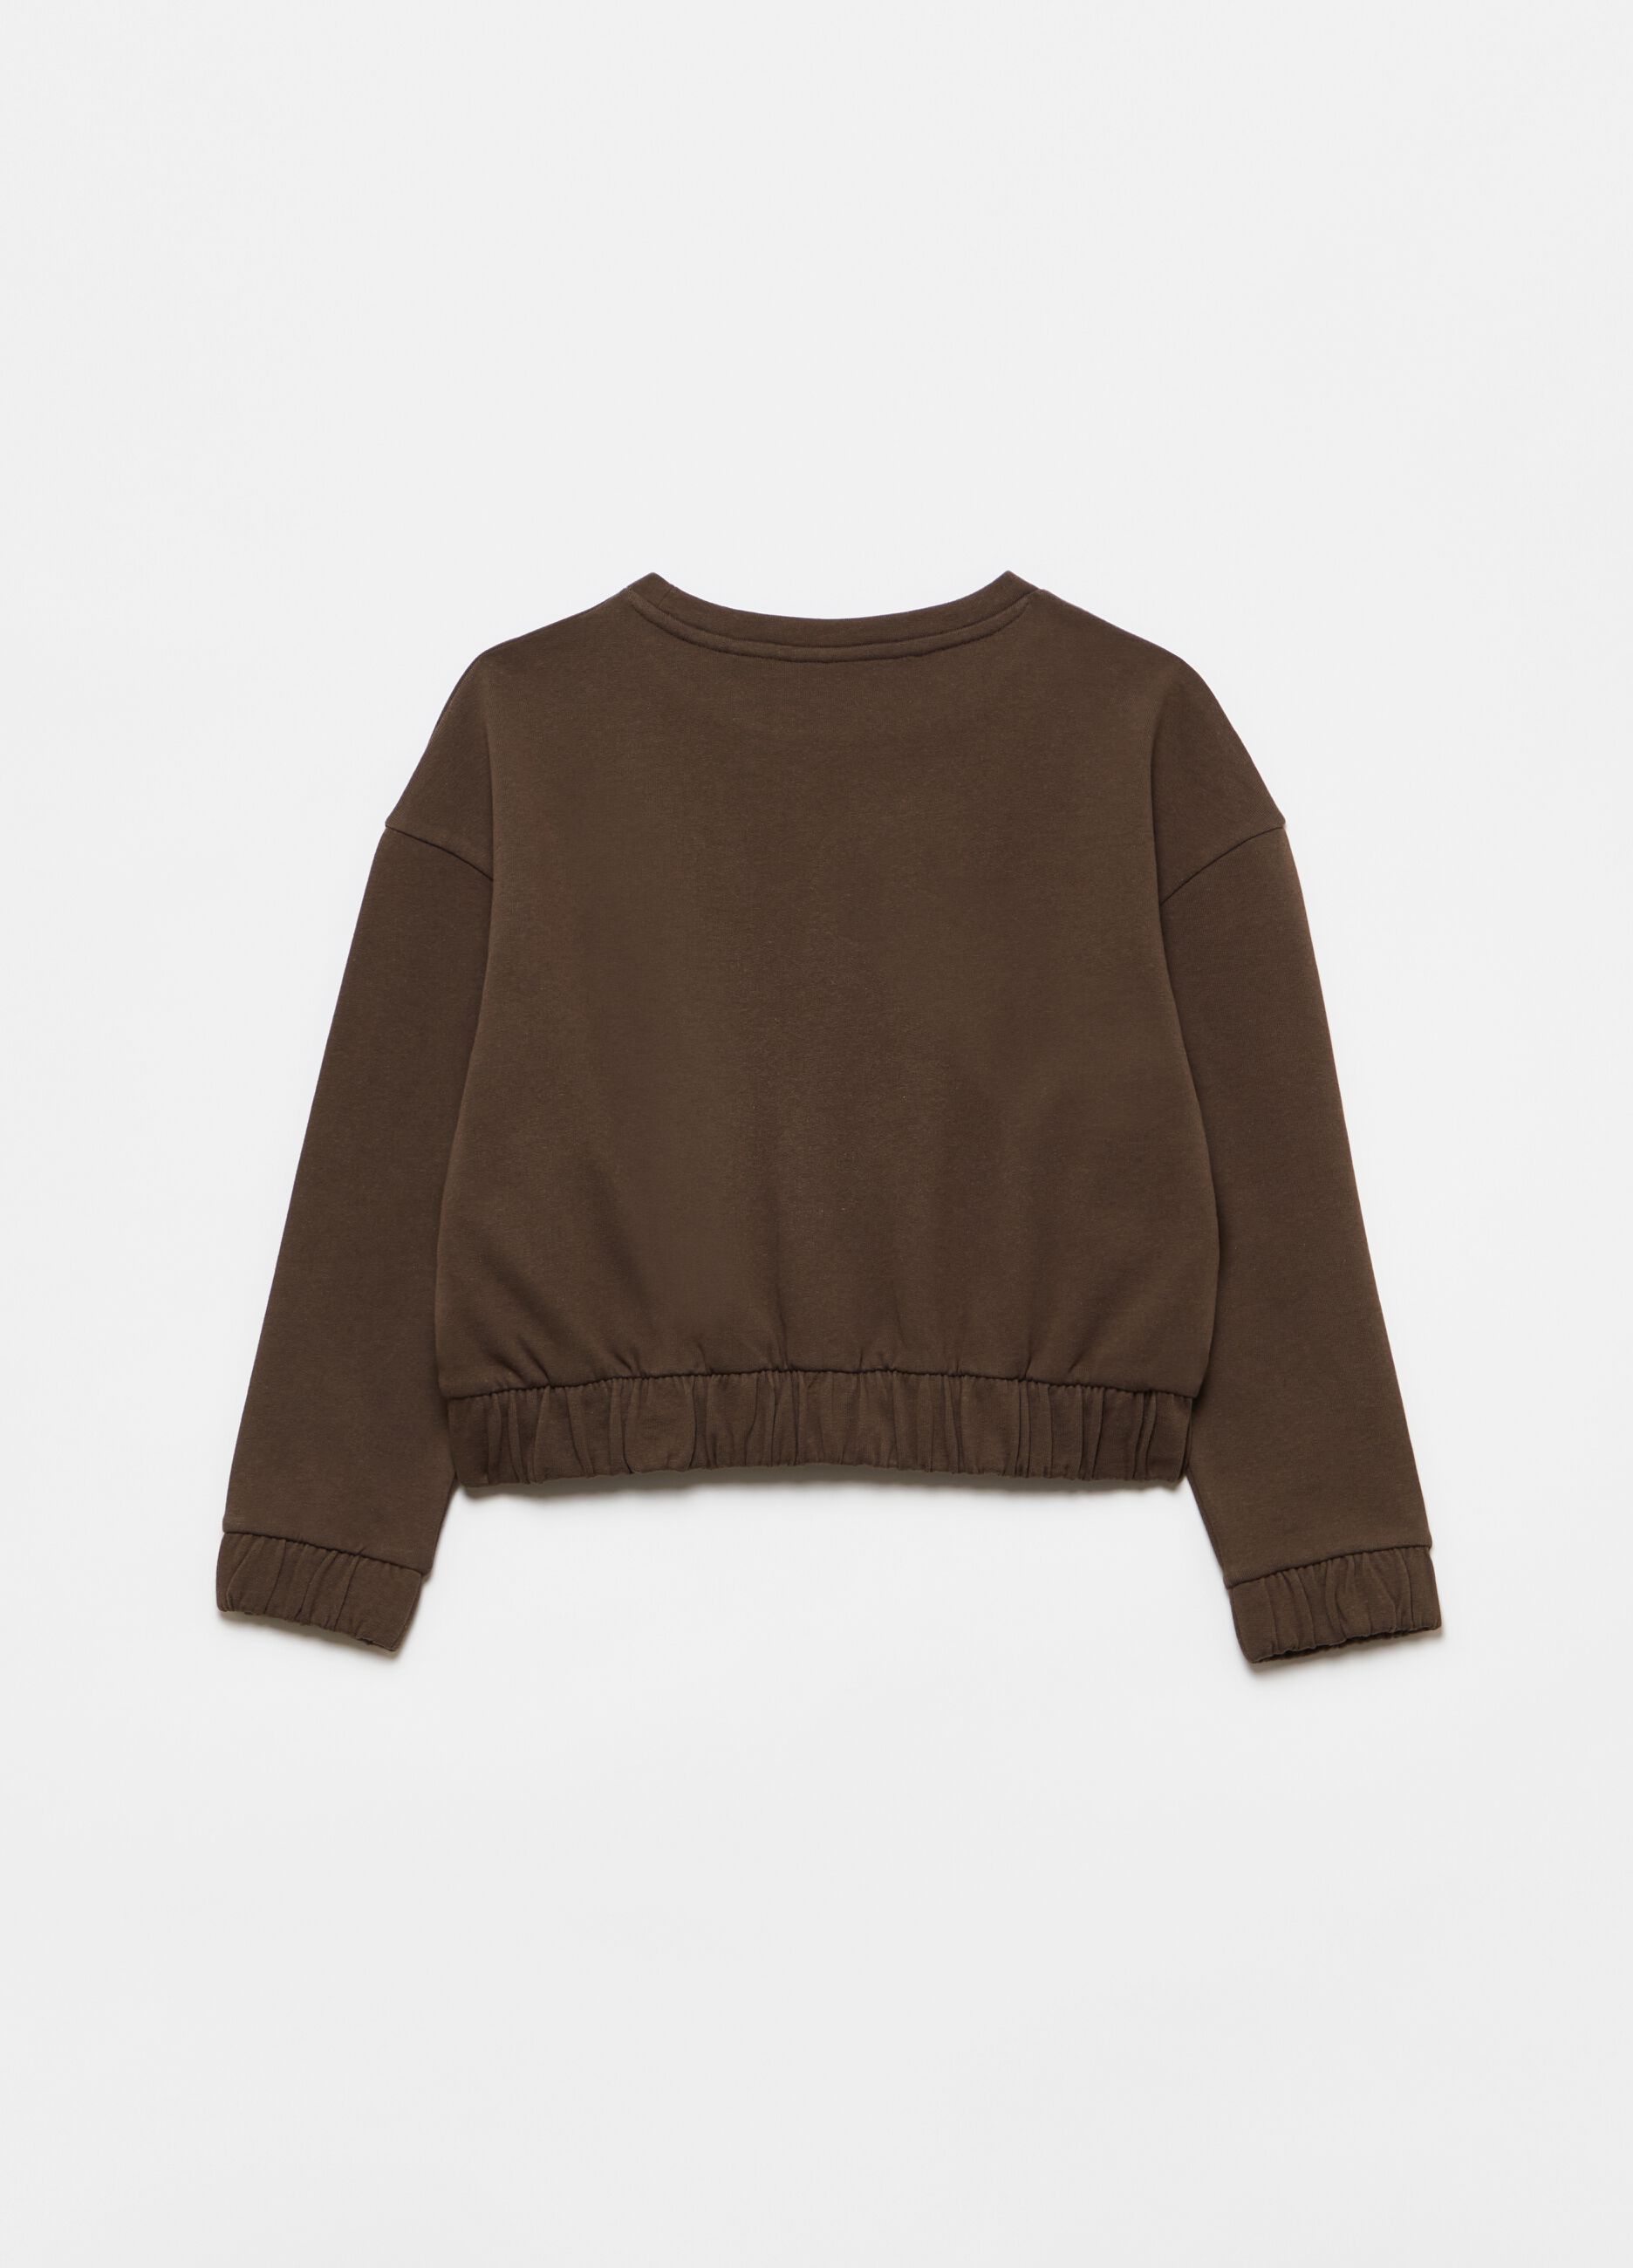 Crop sweatshirt in 100% cotton with print